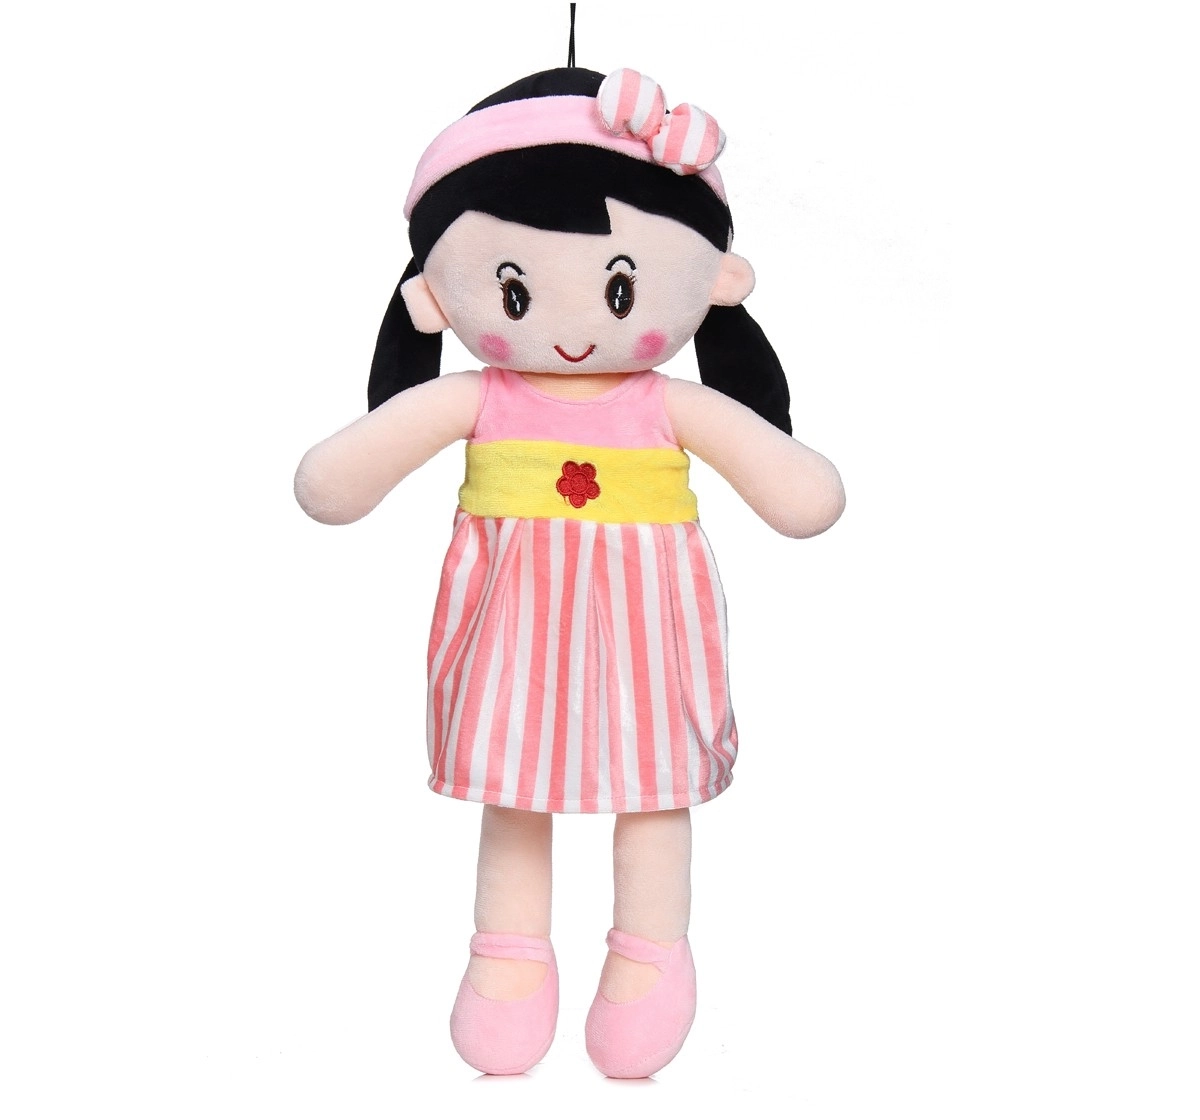 Toy Tales Super Soft Rag Doll, 60 Cm, 3Y+, Multicolor